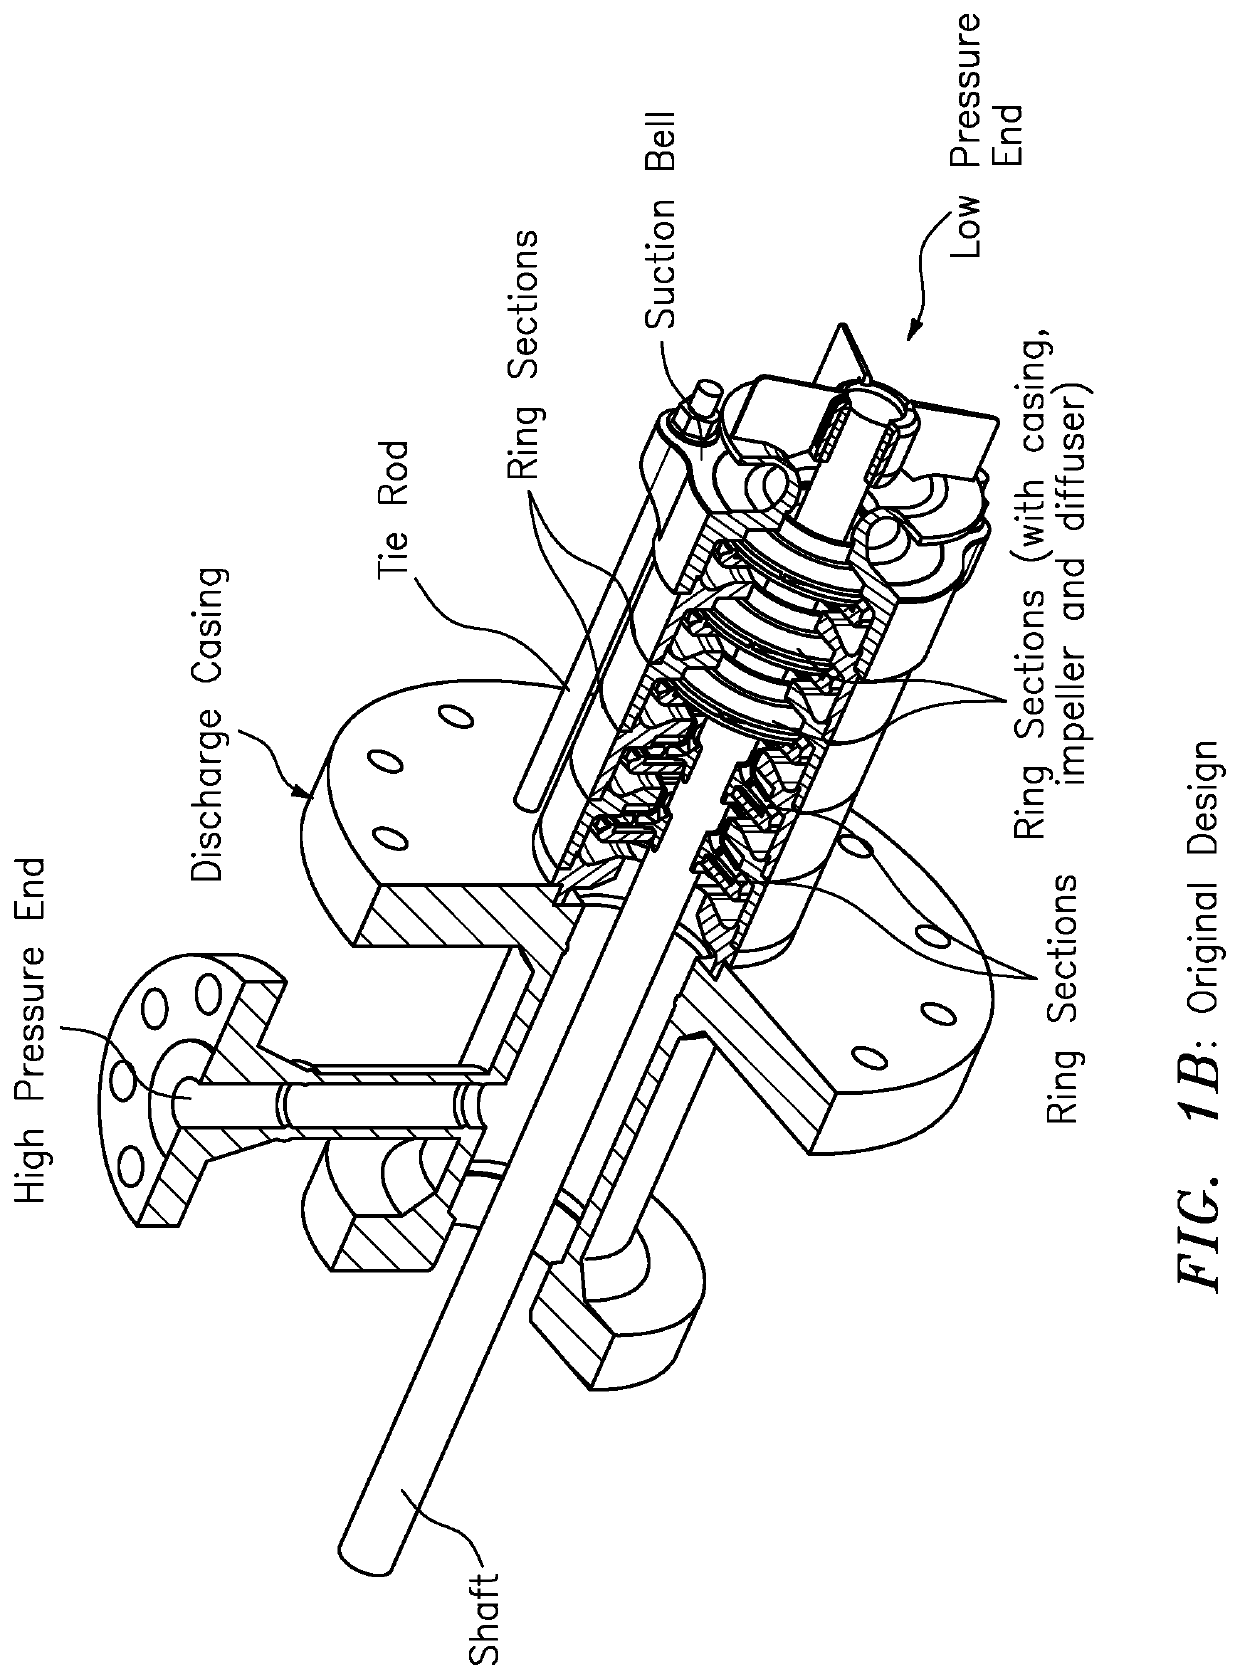 Ring section pump having intermediate tie rod combination